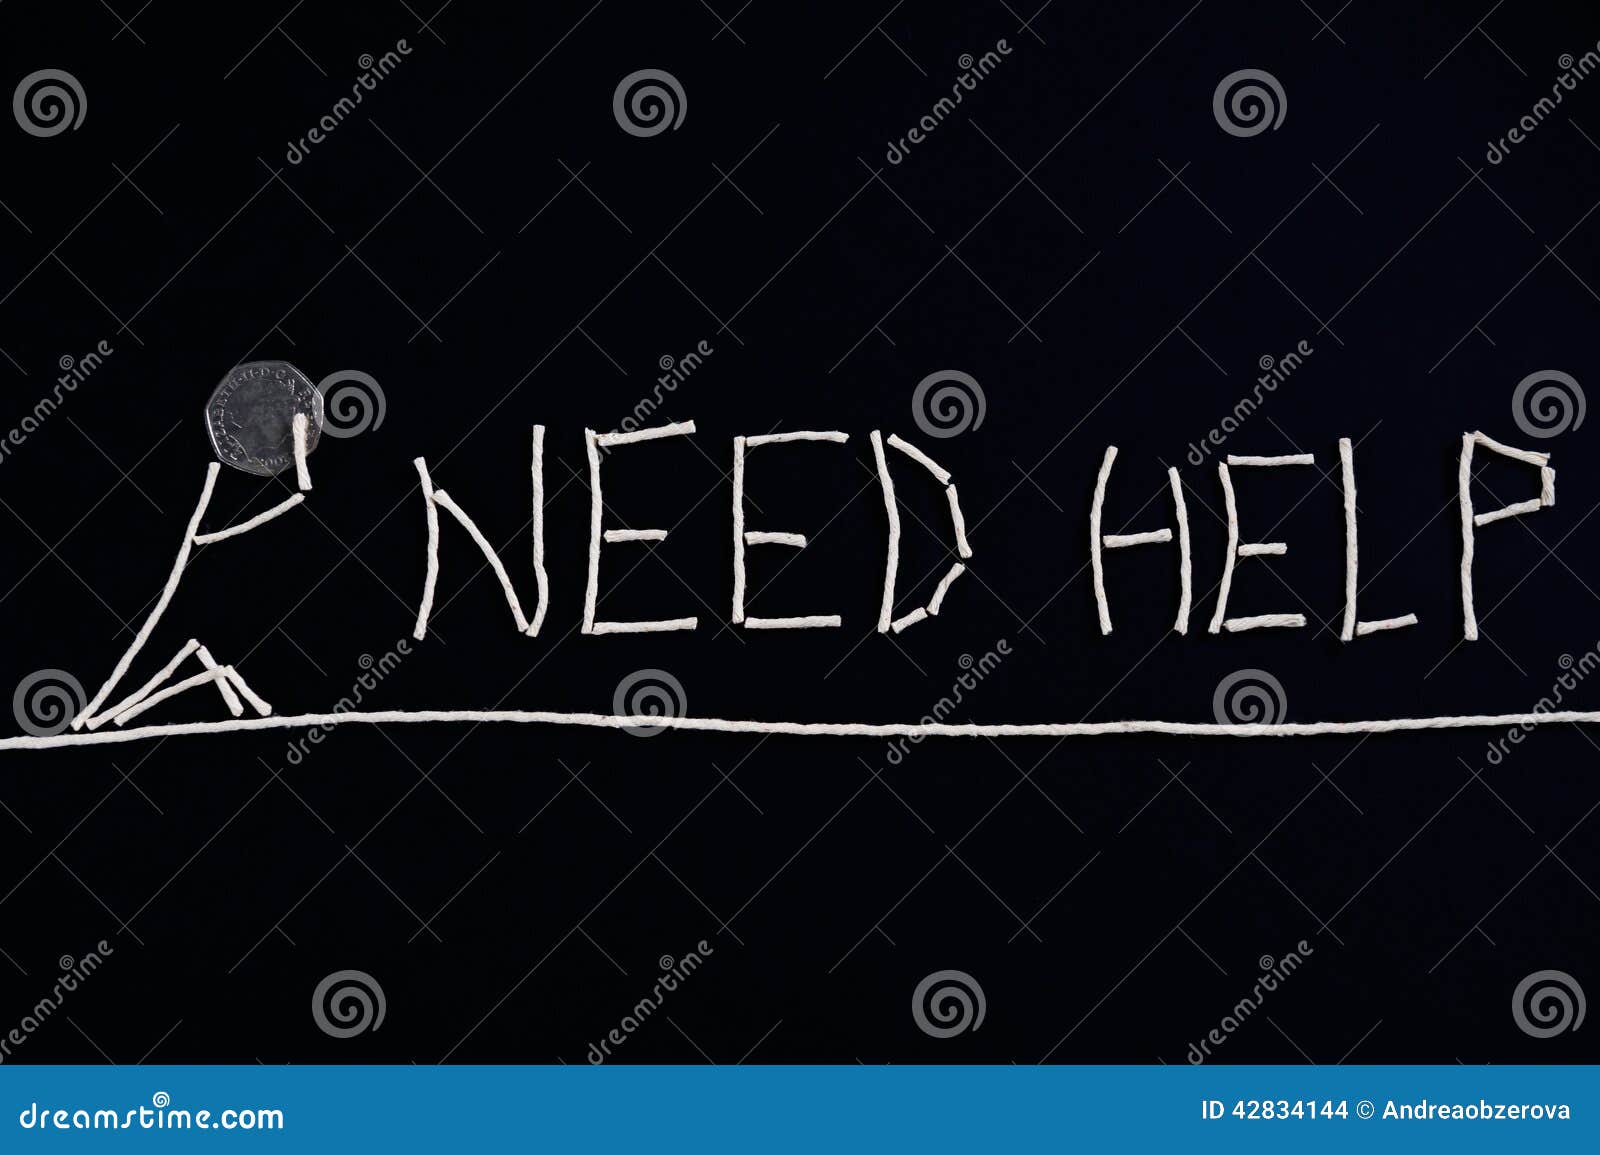 desperate call for help, person needing help, unusual concept.